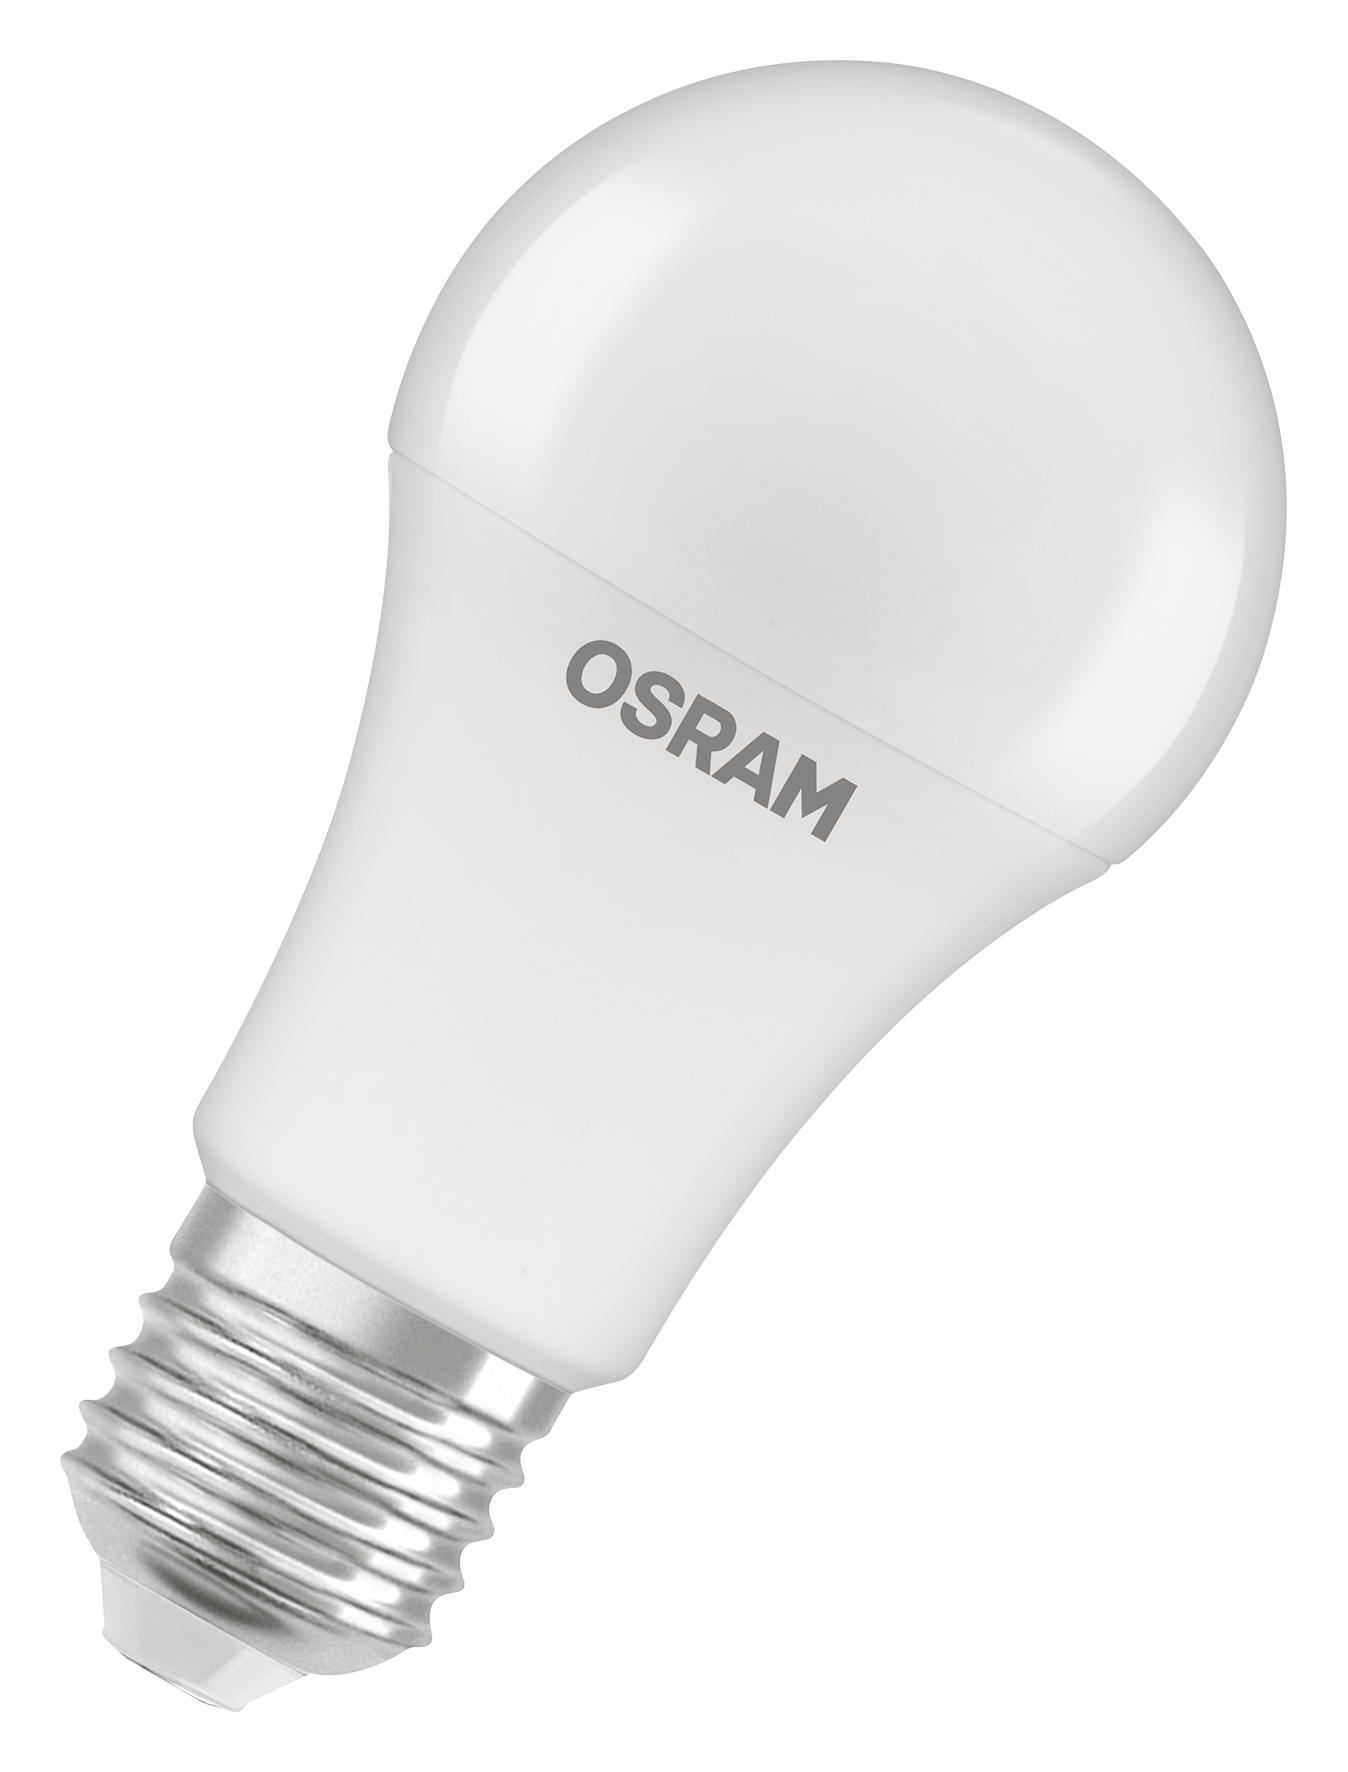 OSRAM LED STAR MOTION SENSOR CLASSIC A LED-Speziallampen mit Bewegungs